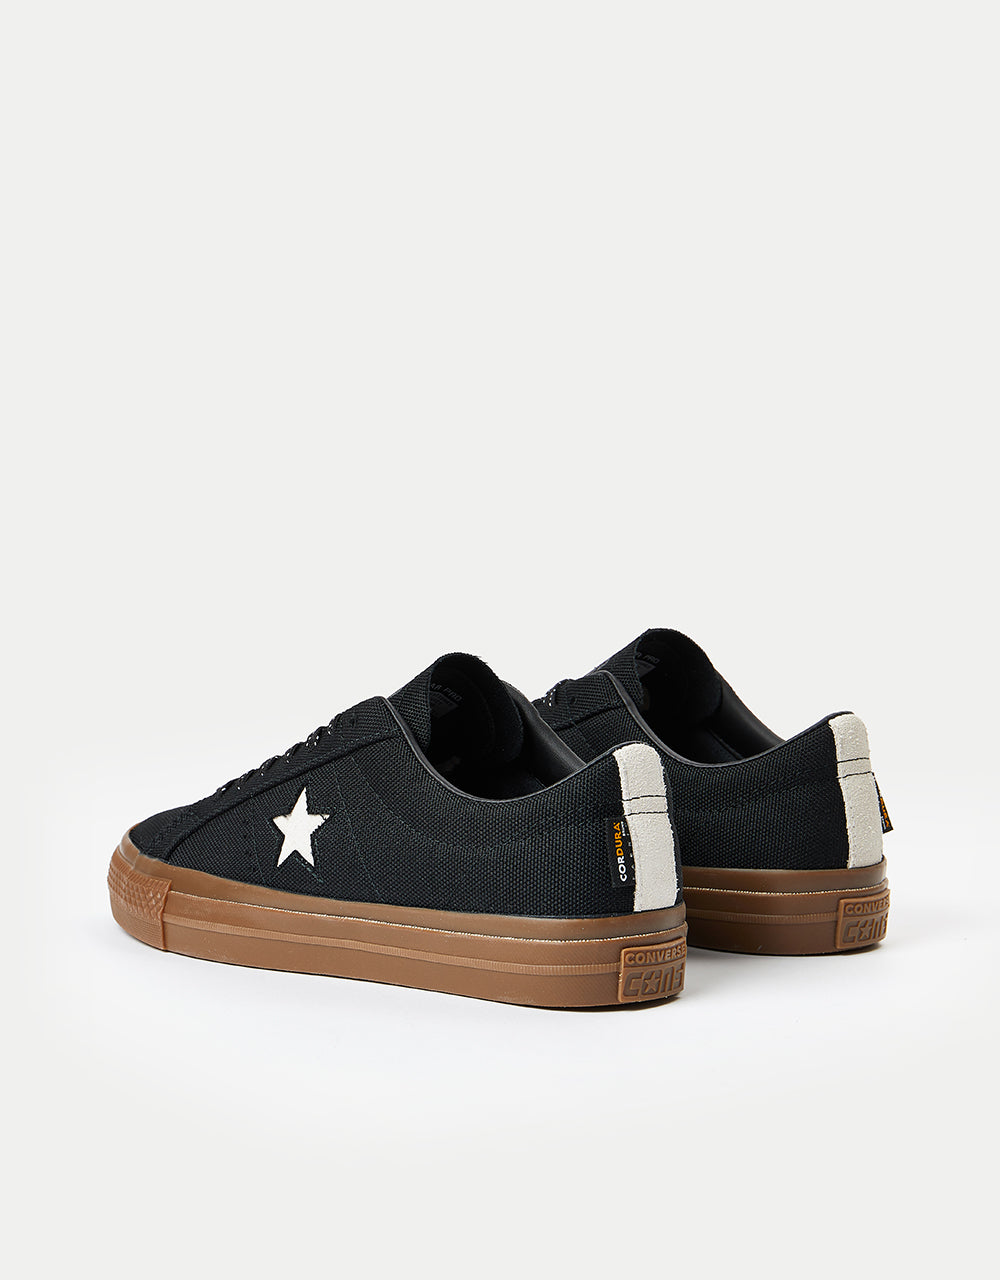 Converse One Star Pro Cordura Canvas Skate Shoes - Black/White/Dark Gum